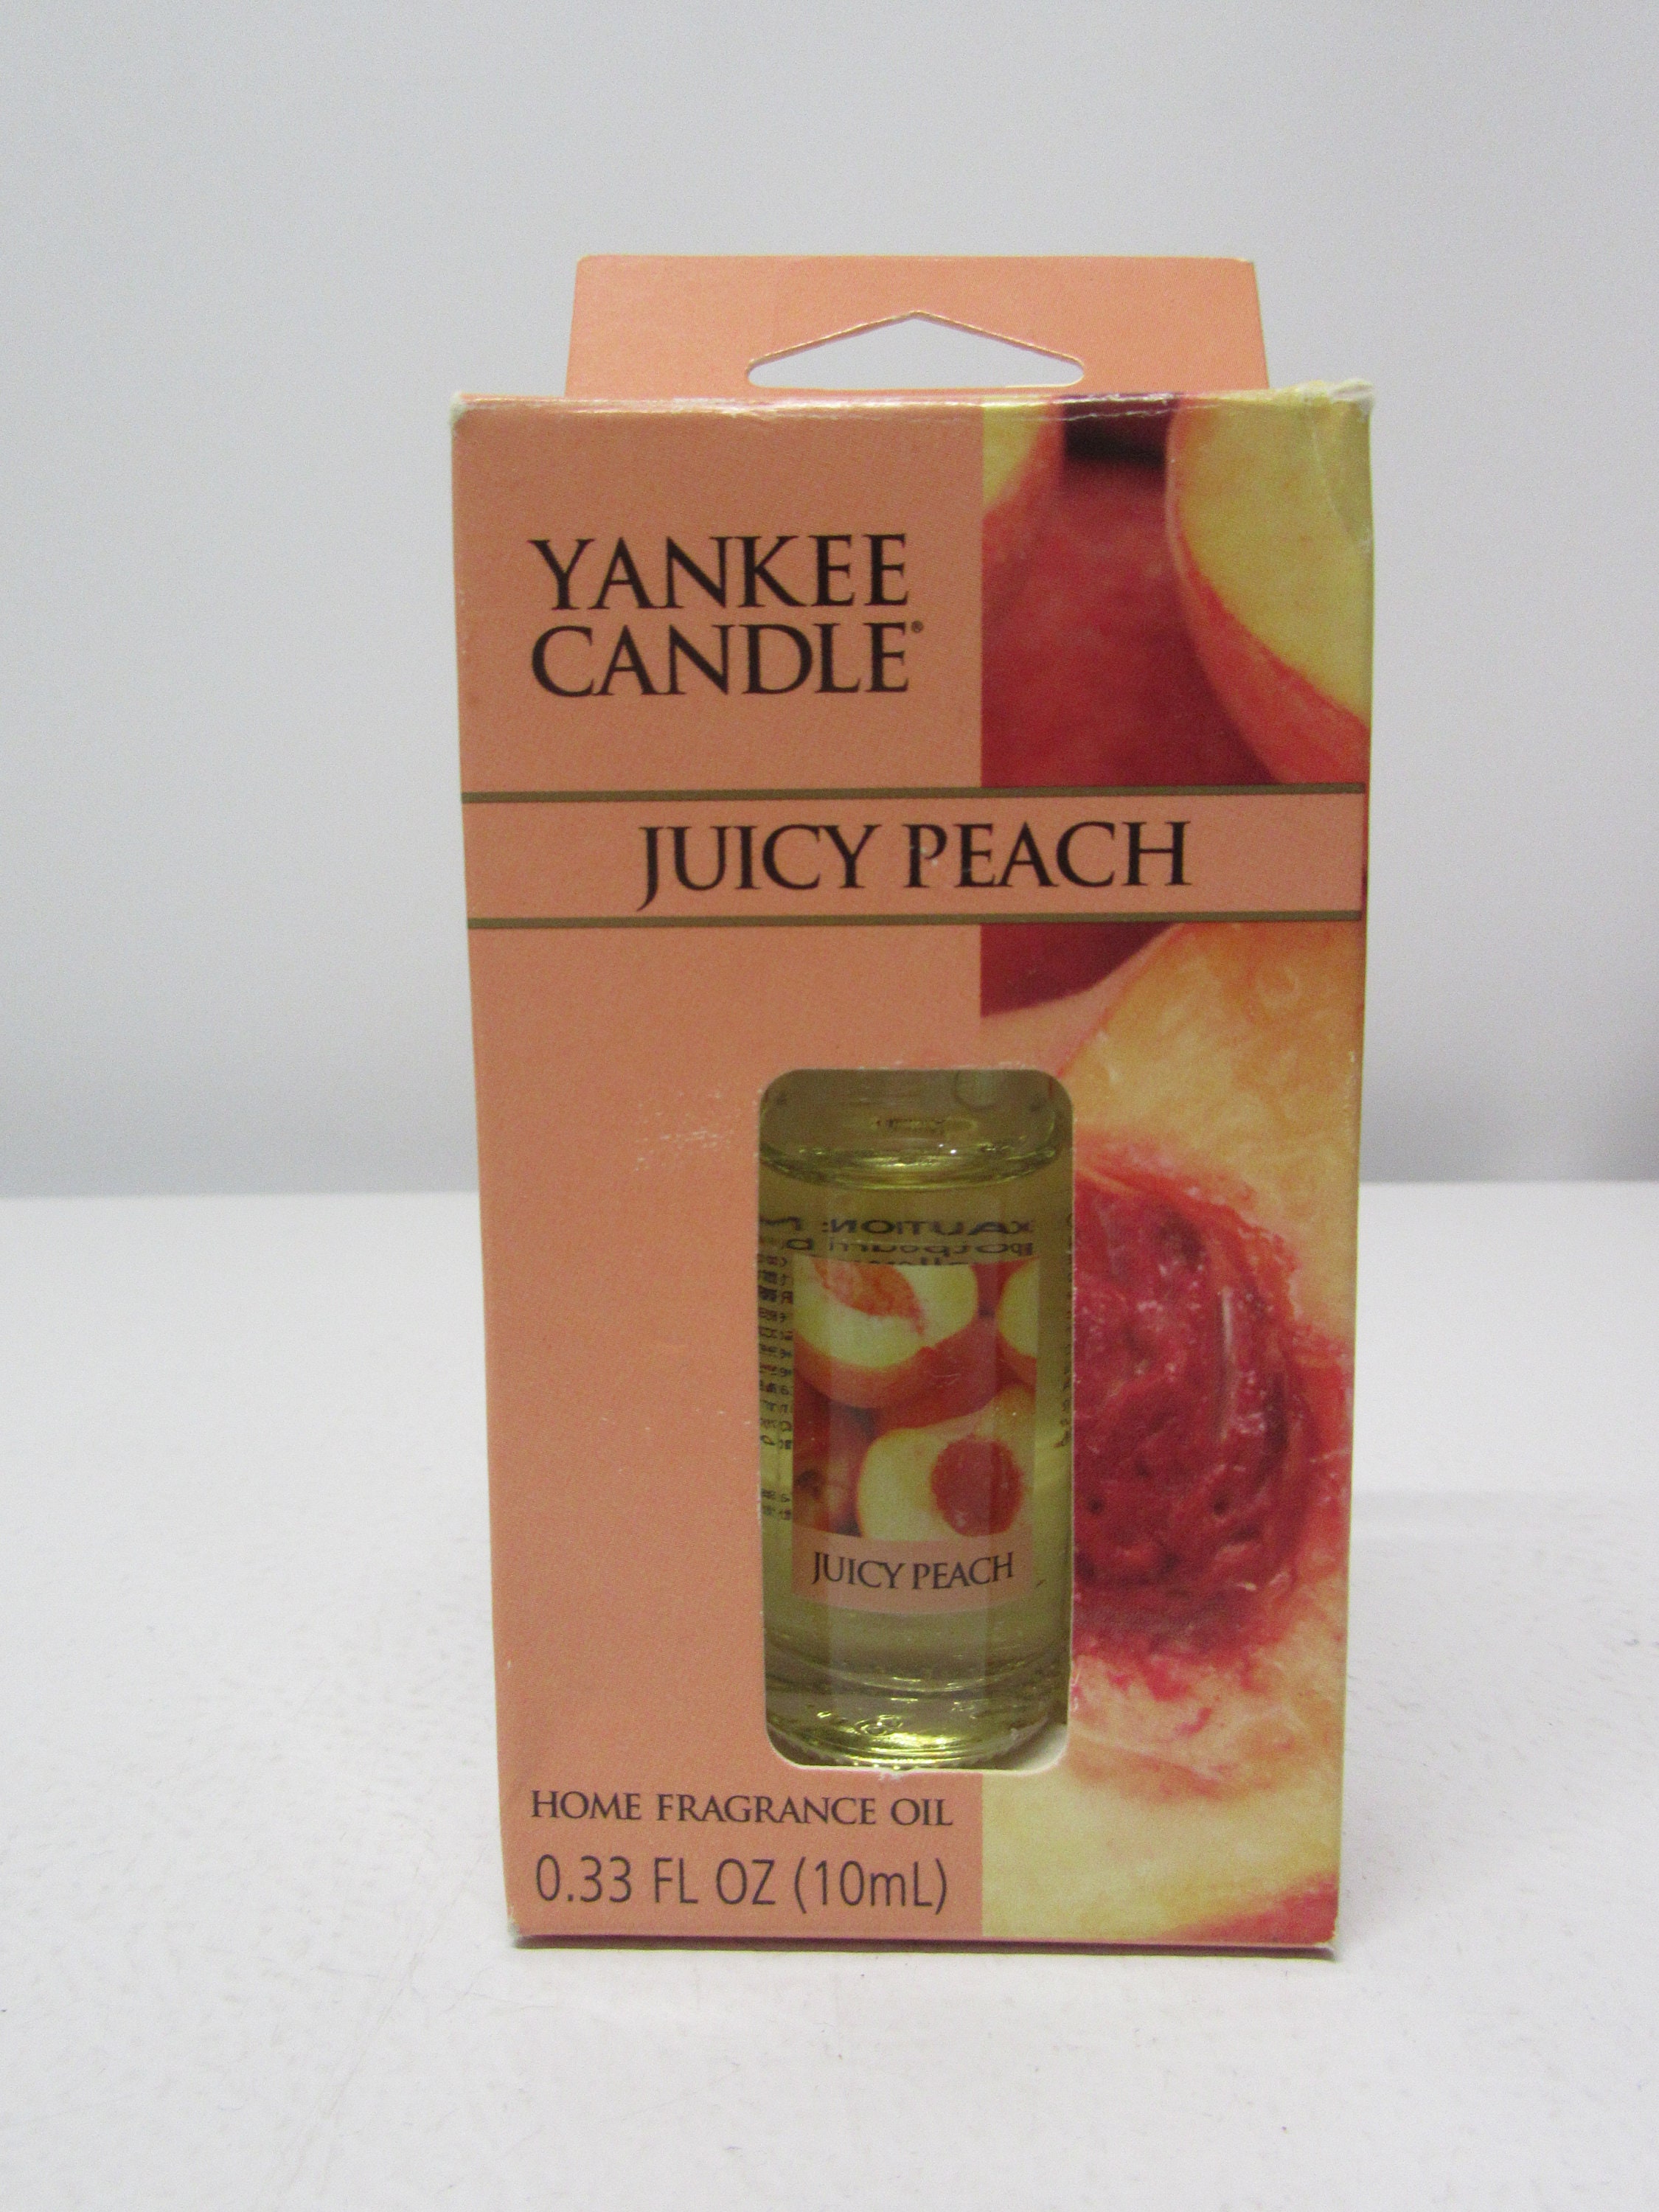 Yankee Candle Home Fragrance Oil Juicy Peach, 0.33fl.oz/10ml 